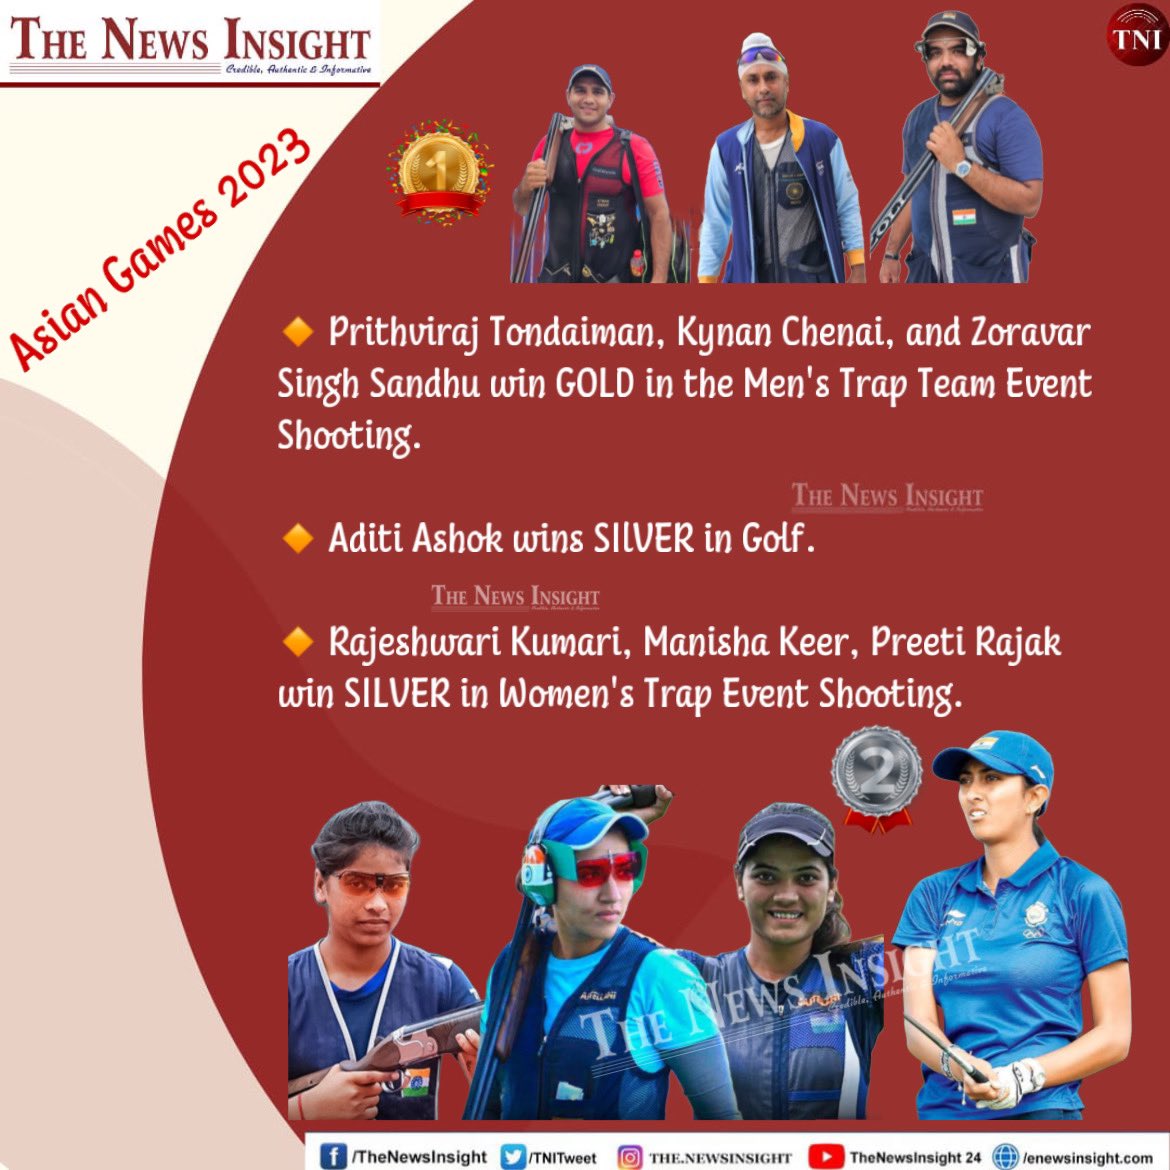 🔴 #MedalAlert for #India at #AsianGames2023 . #TNI #Insight #Shooting #Golf